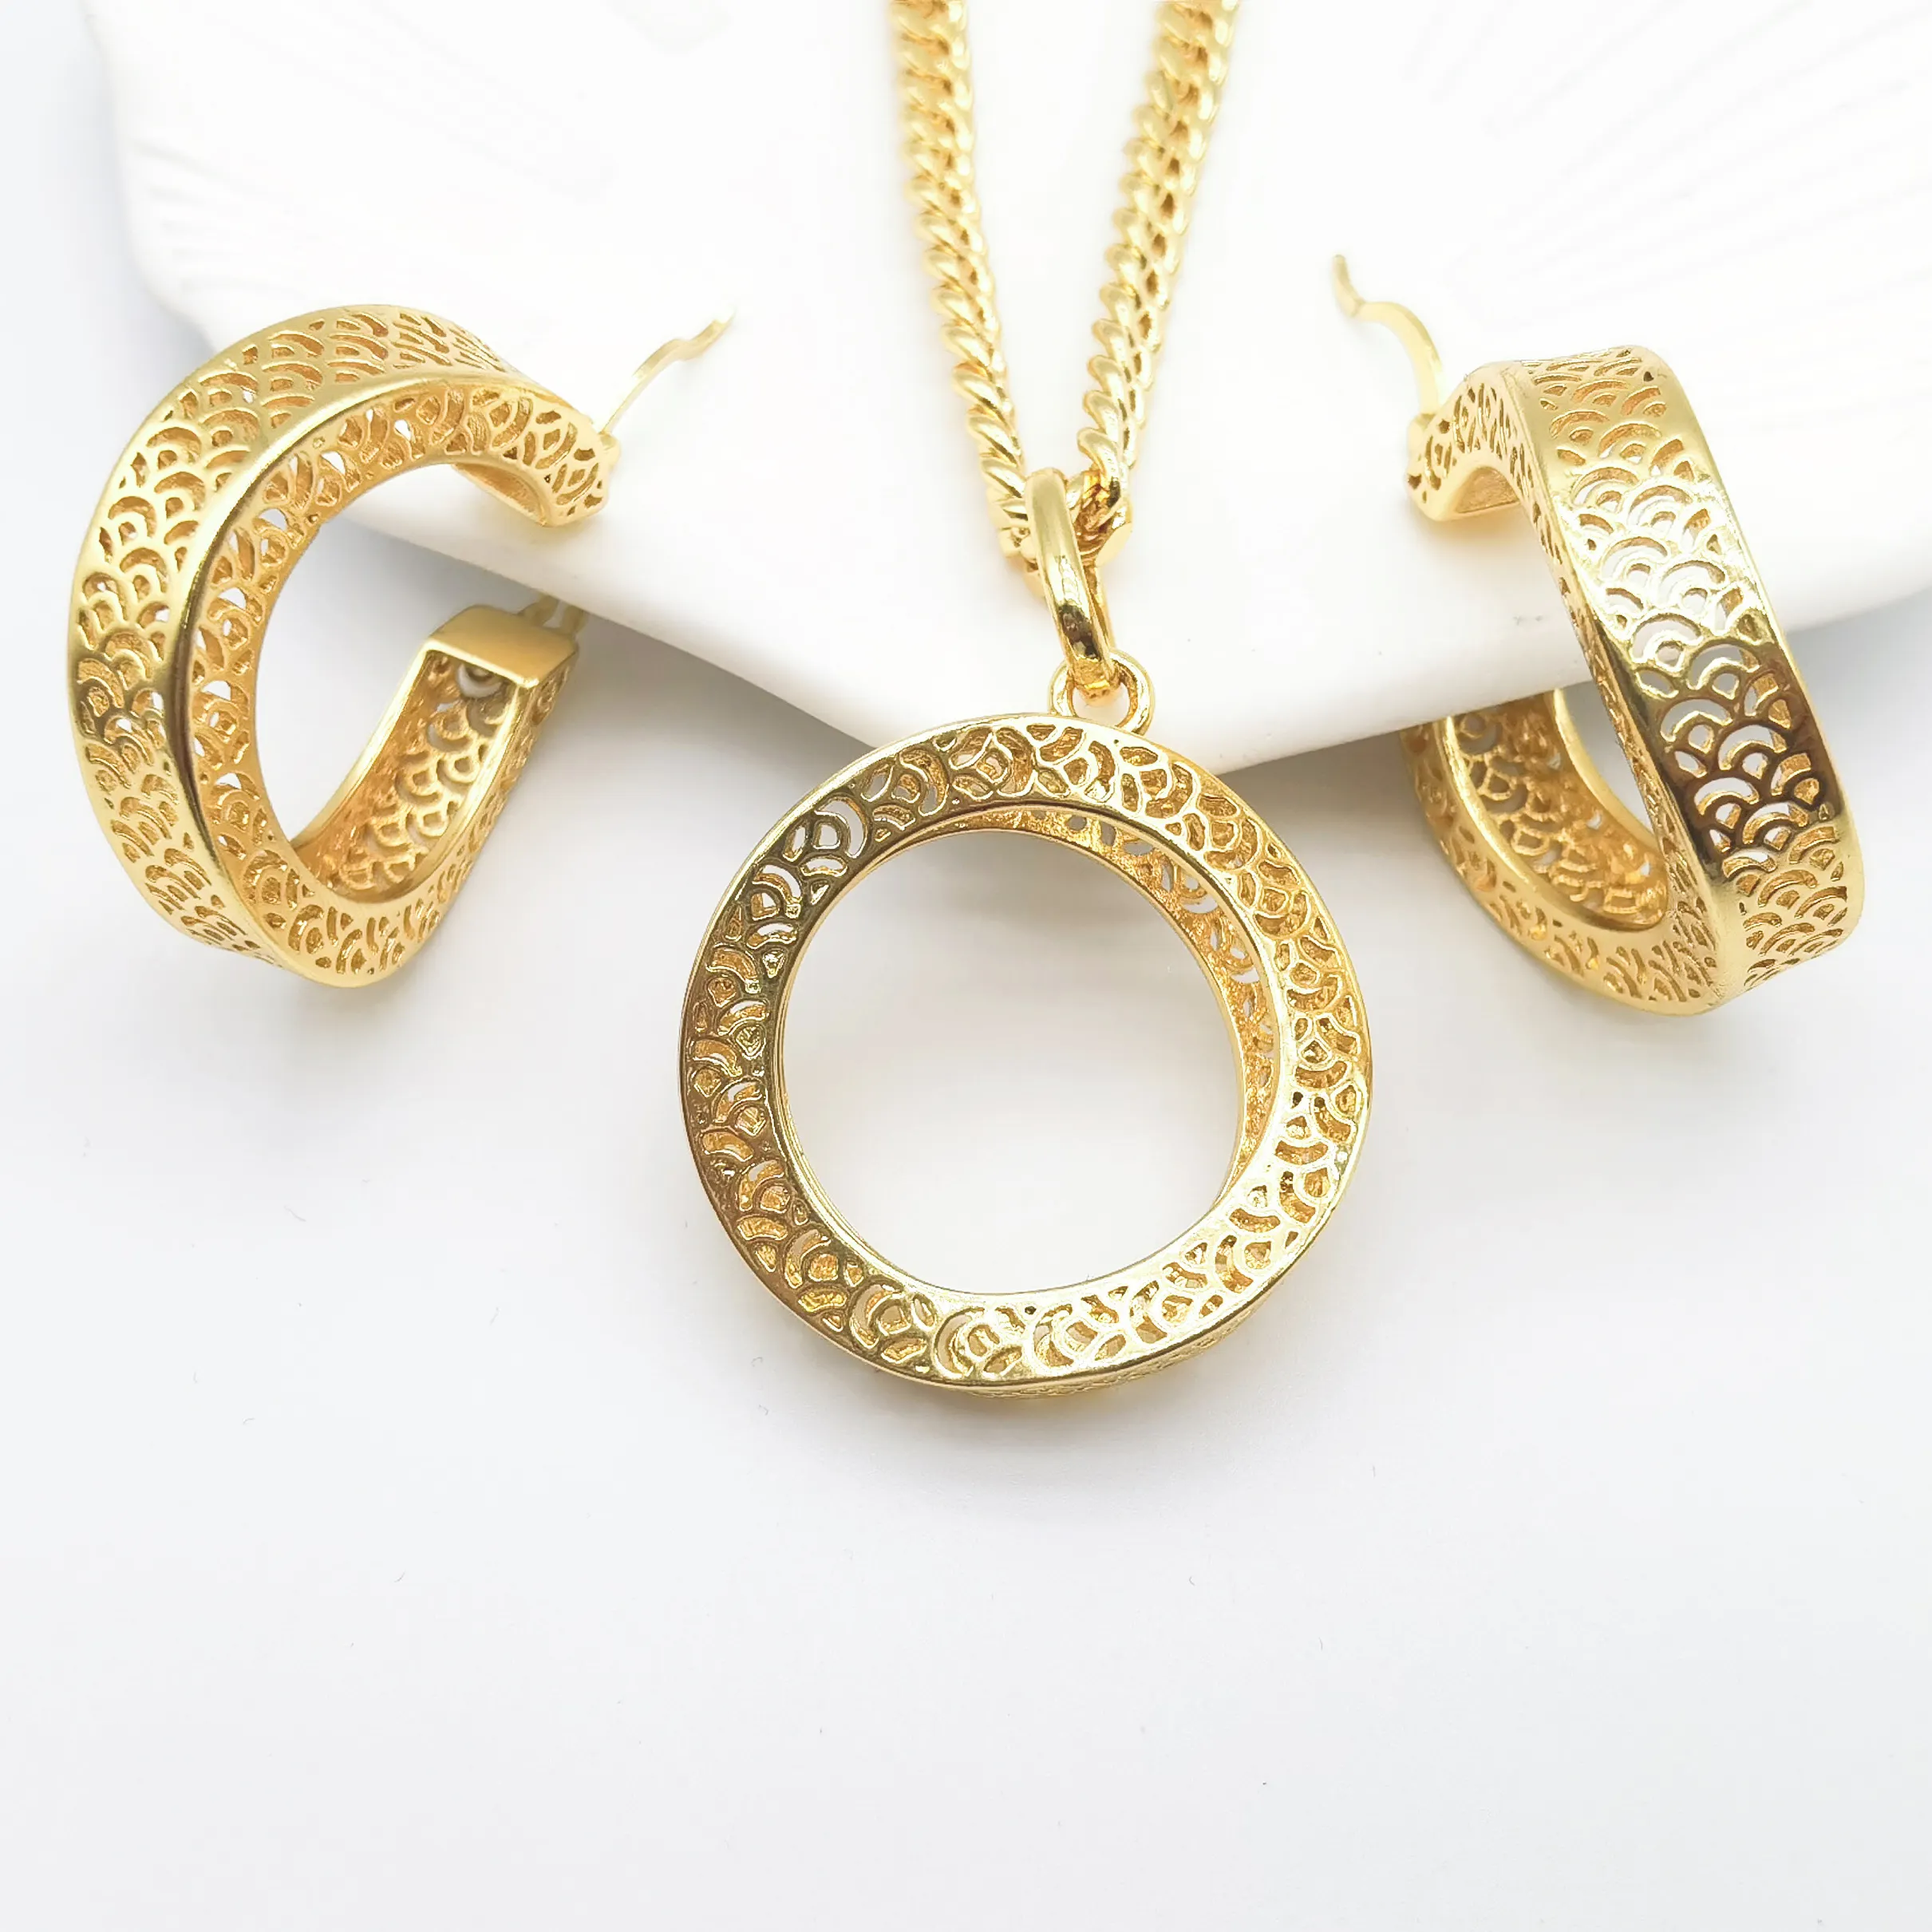 New Brass Classic Jewelry Sets Women's Earrings Pendants Romantic Sets Bridal Wedding Party Anniversary Fashion Jewelry